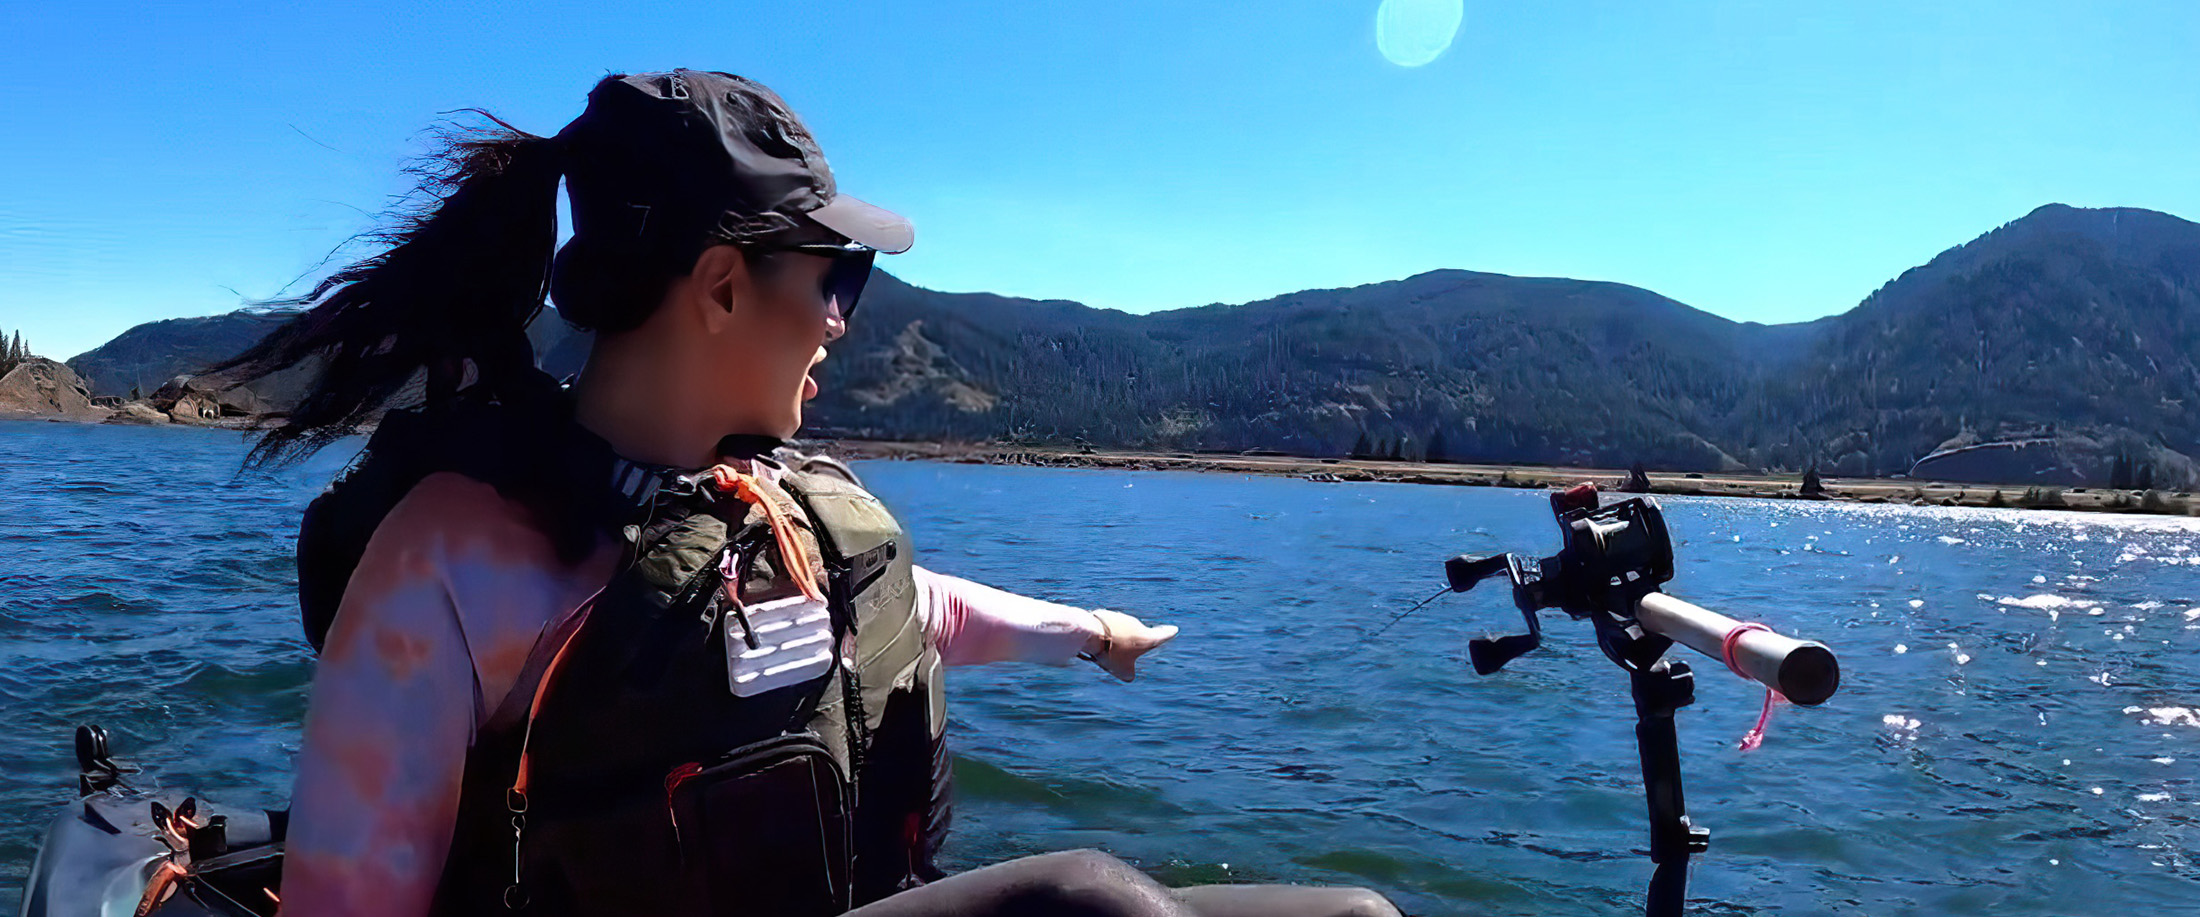 outdoor america ashley nicole lewis lake trolling for salmon